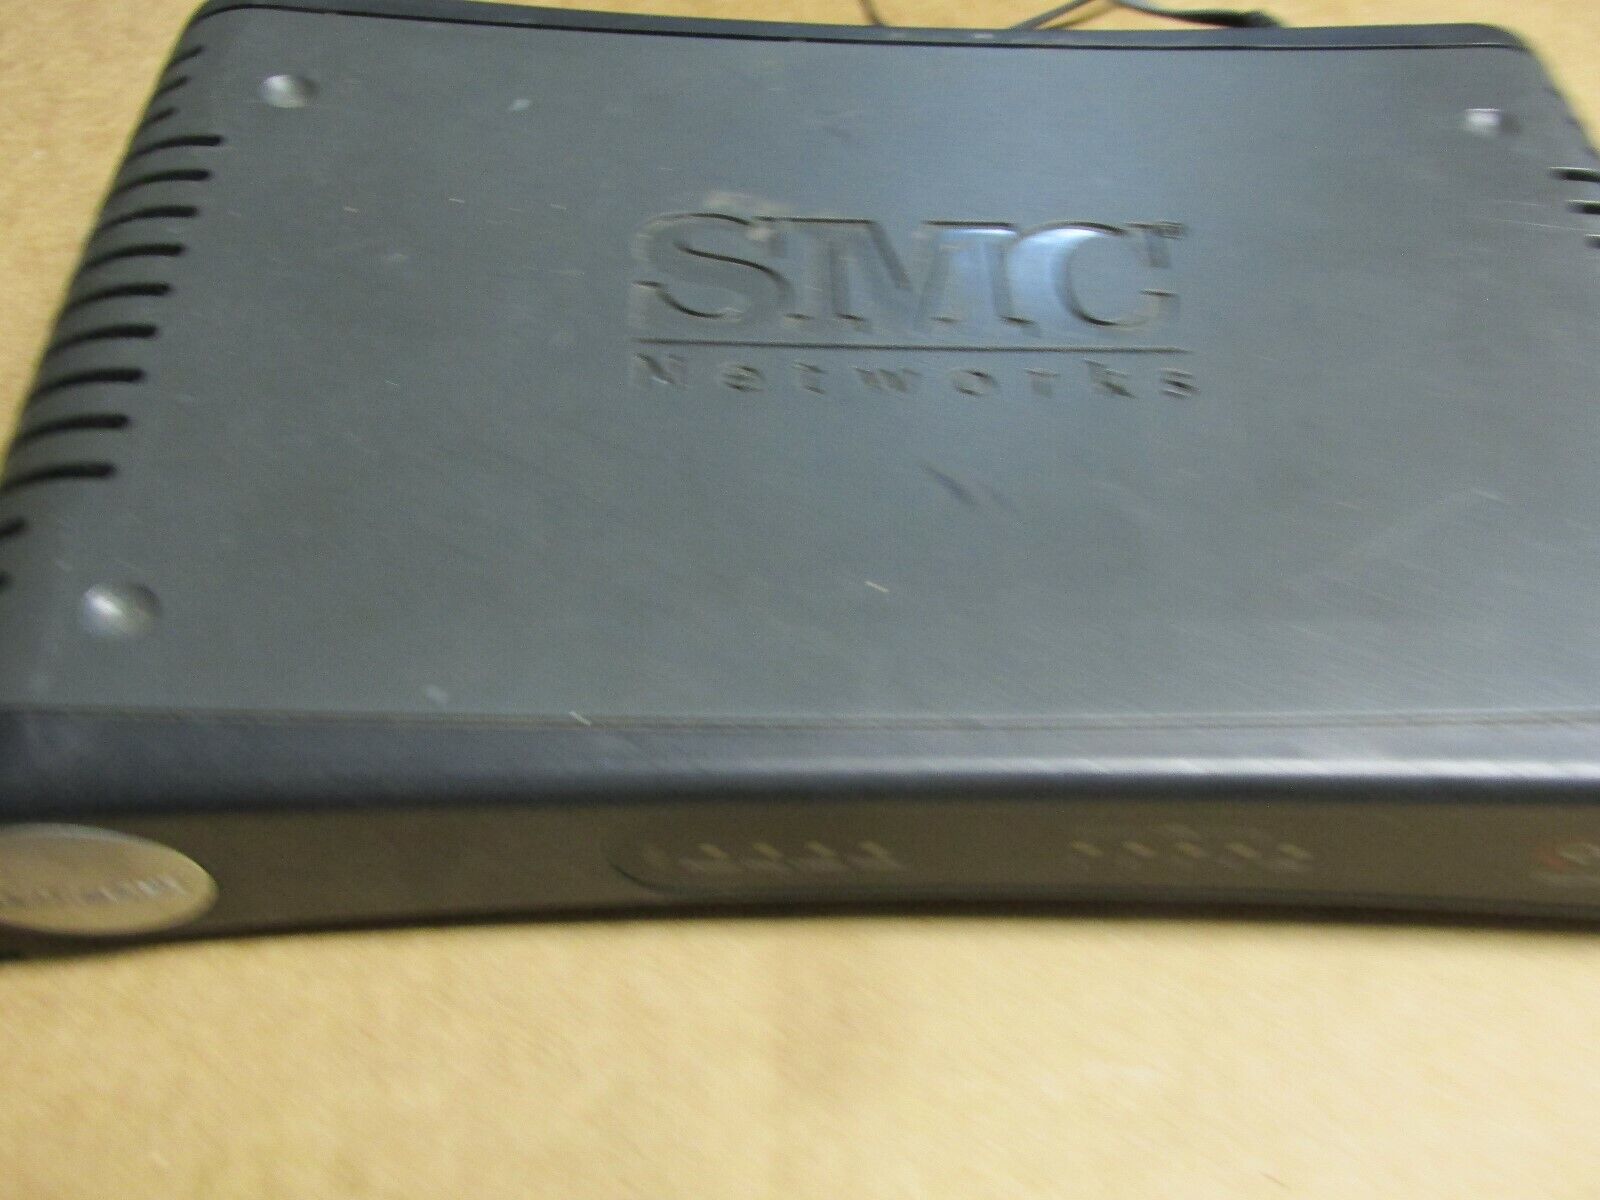 SMC NETWORKS SMC8014 MODEM